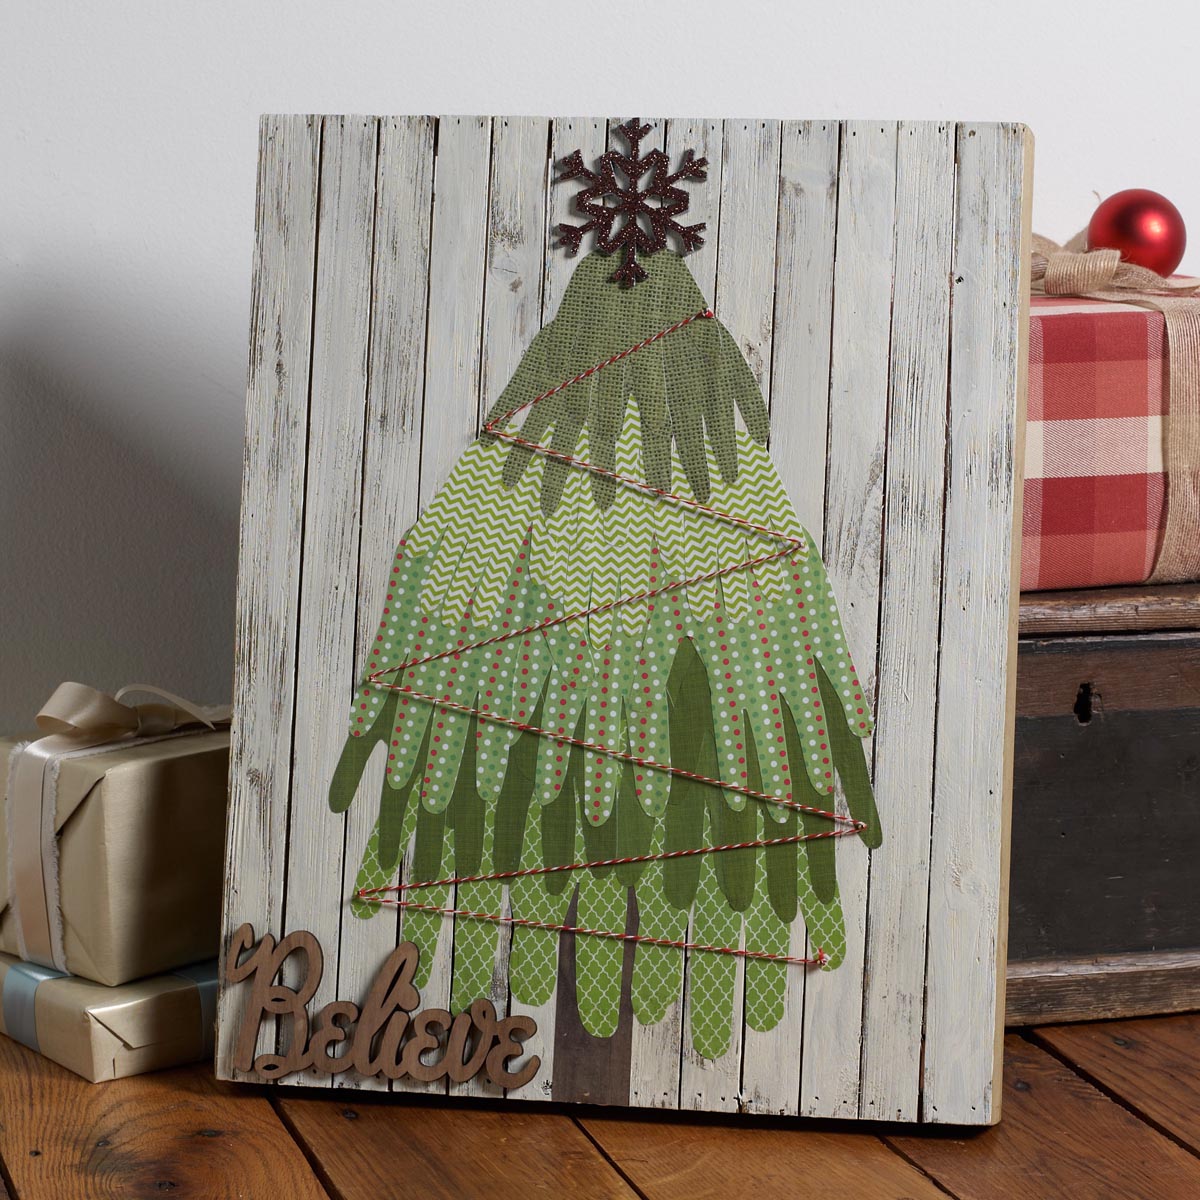 Kids Handprint Christmas Tree Craft Project